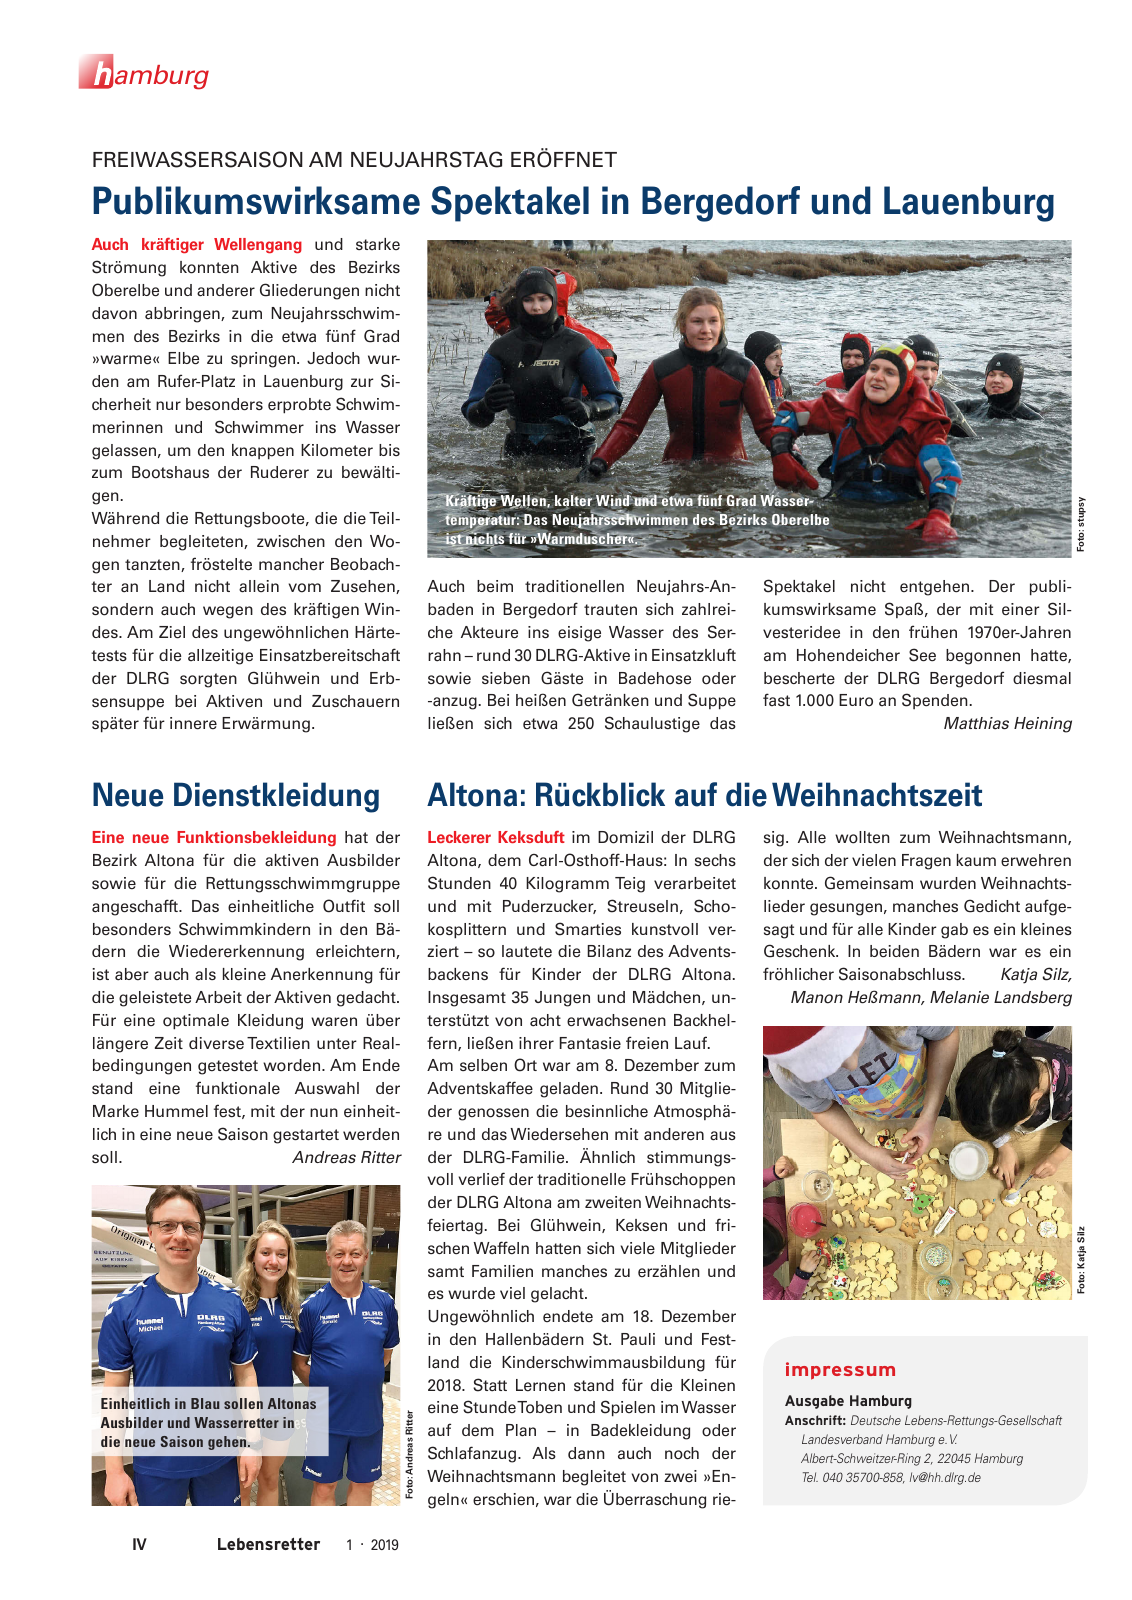 Vorschau Lebensretter 1/2019 –  Regionalausgabe Hamburg Seite 6